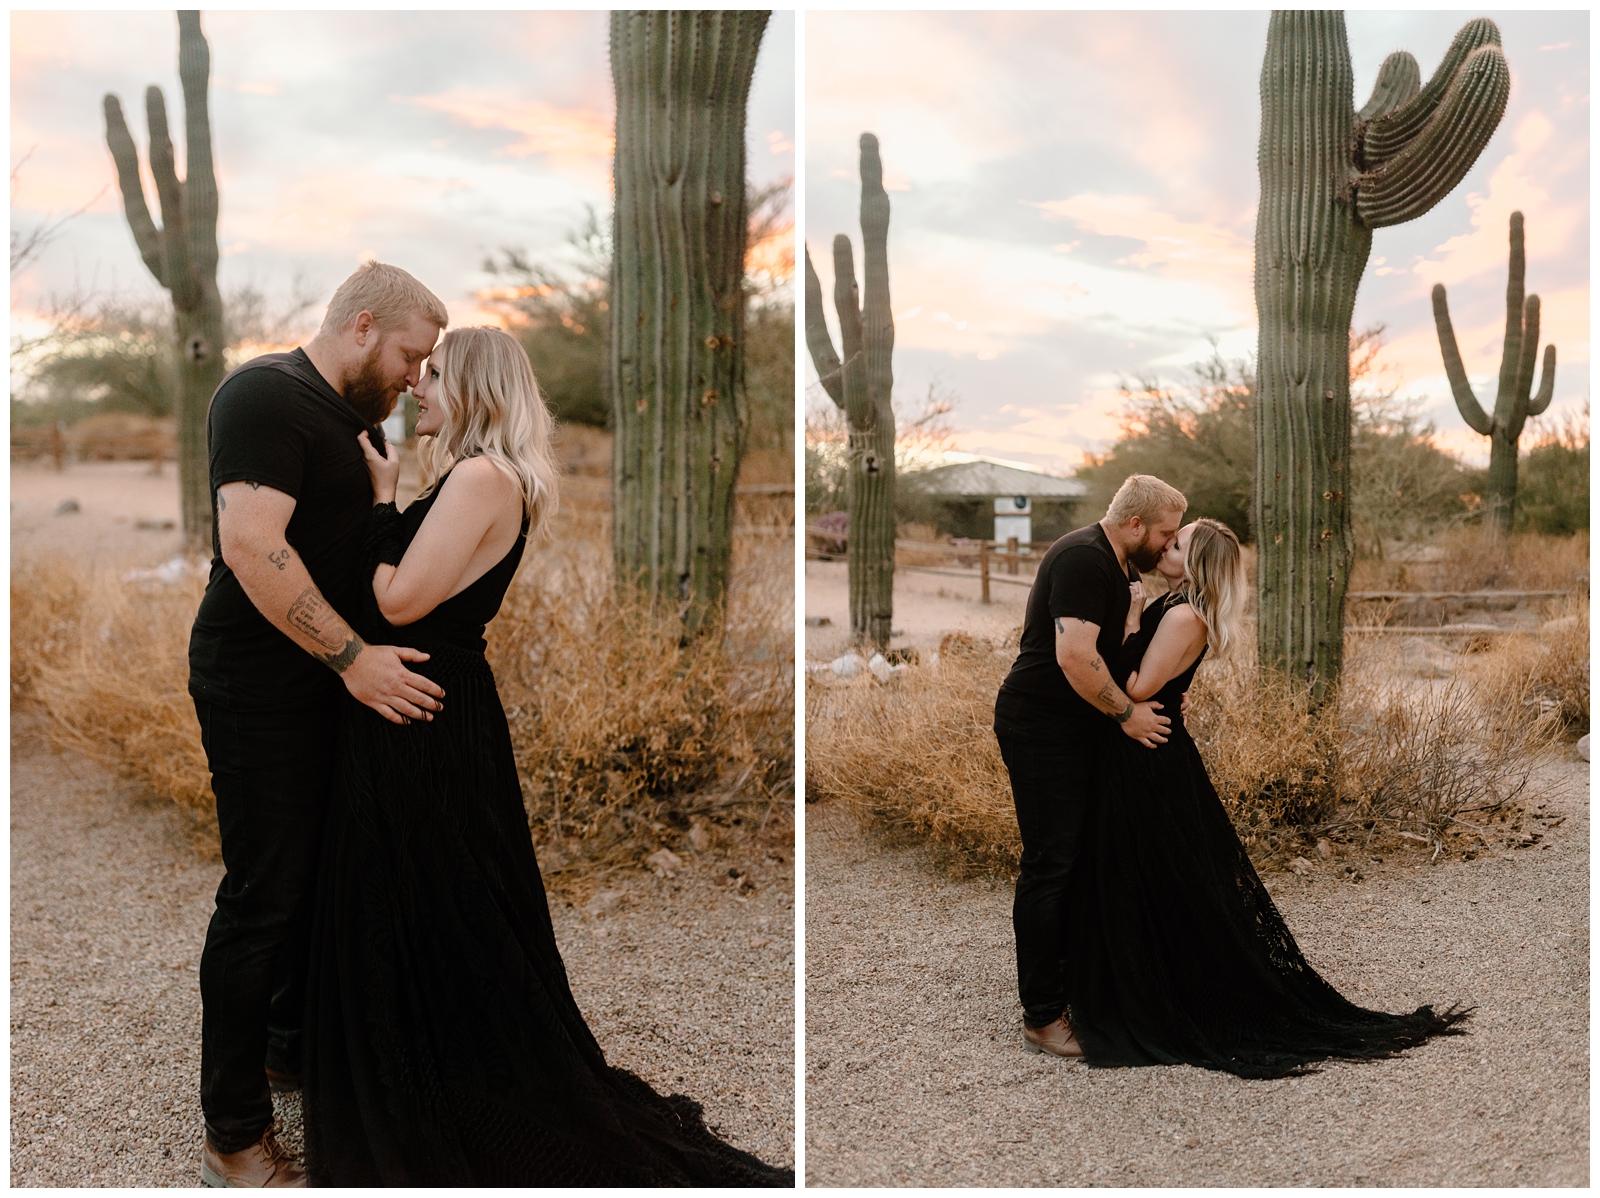 Romantic newlywed portraits on Halloween by Phoenix photographer